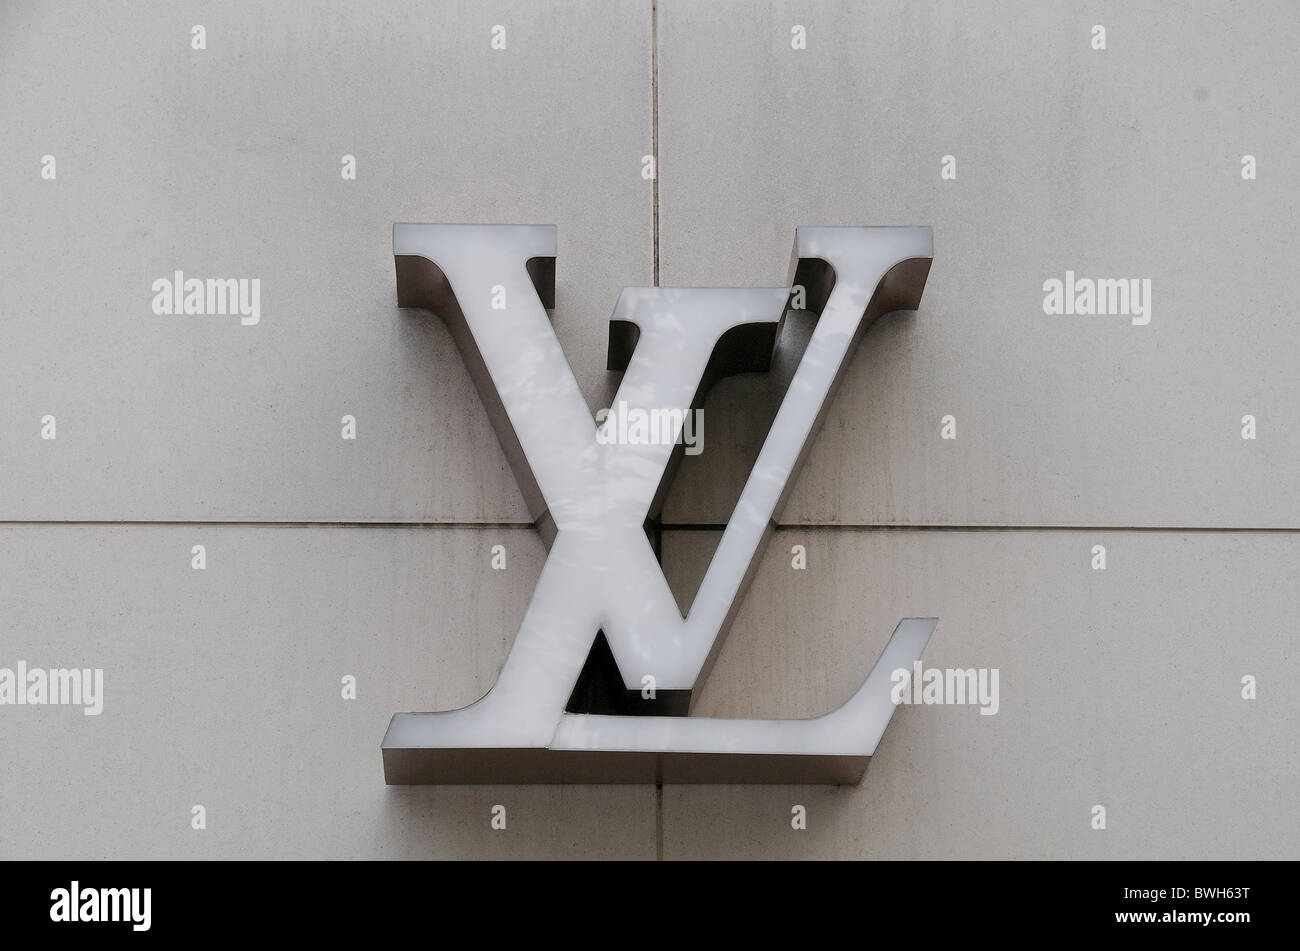 Louis Vuitton logo, Tokyo, Japan Stock Photo - Alamy